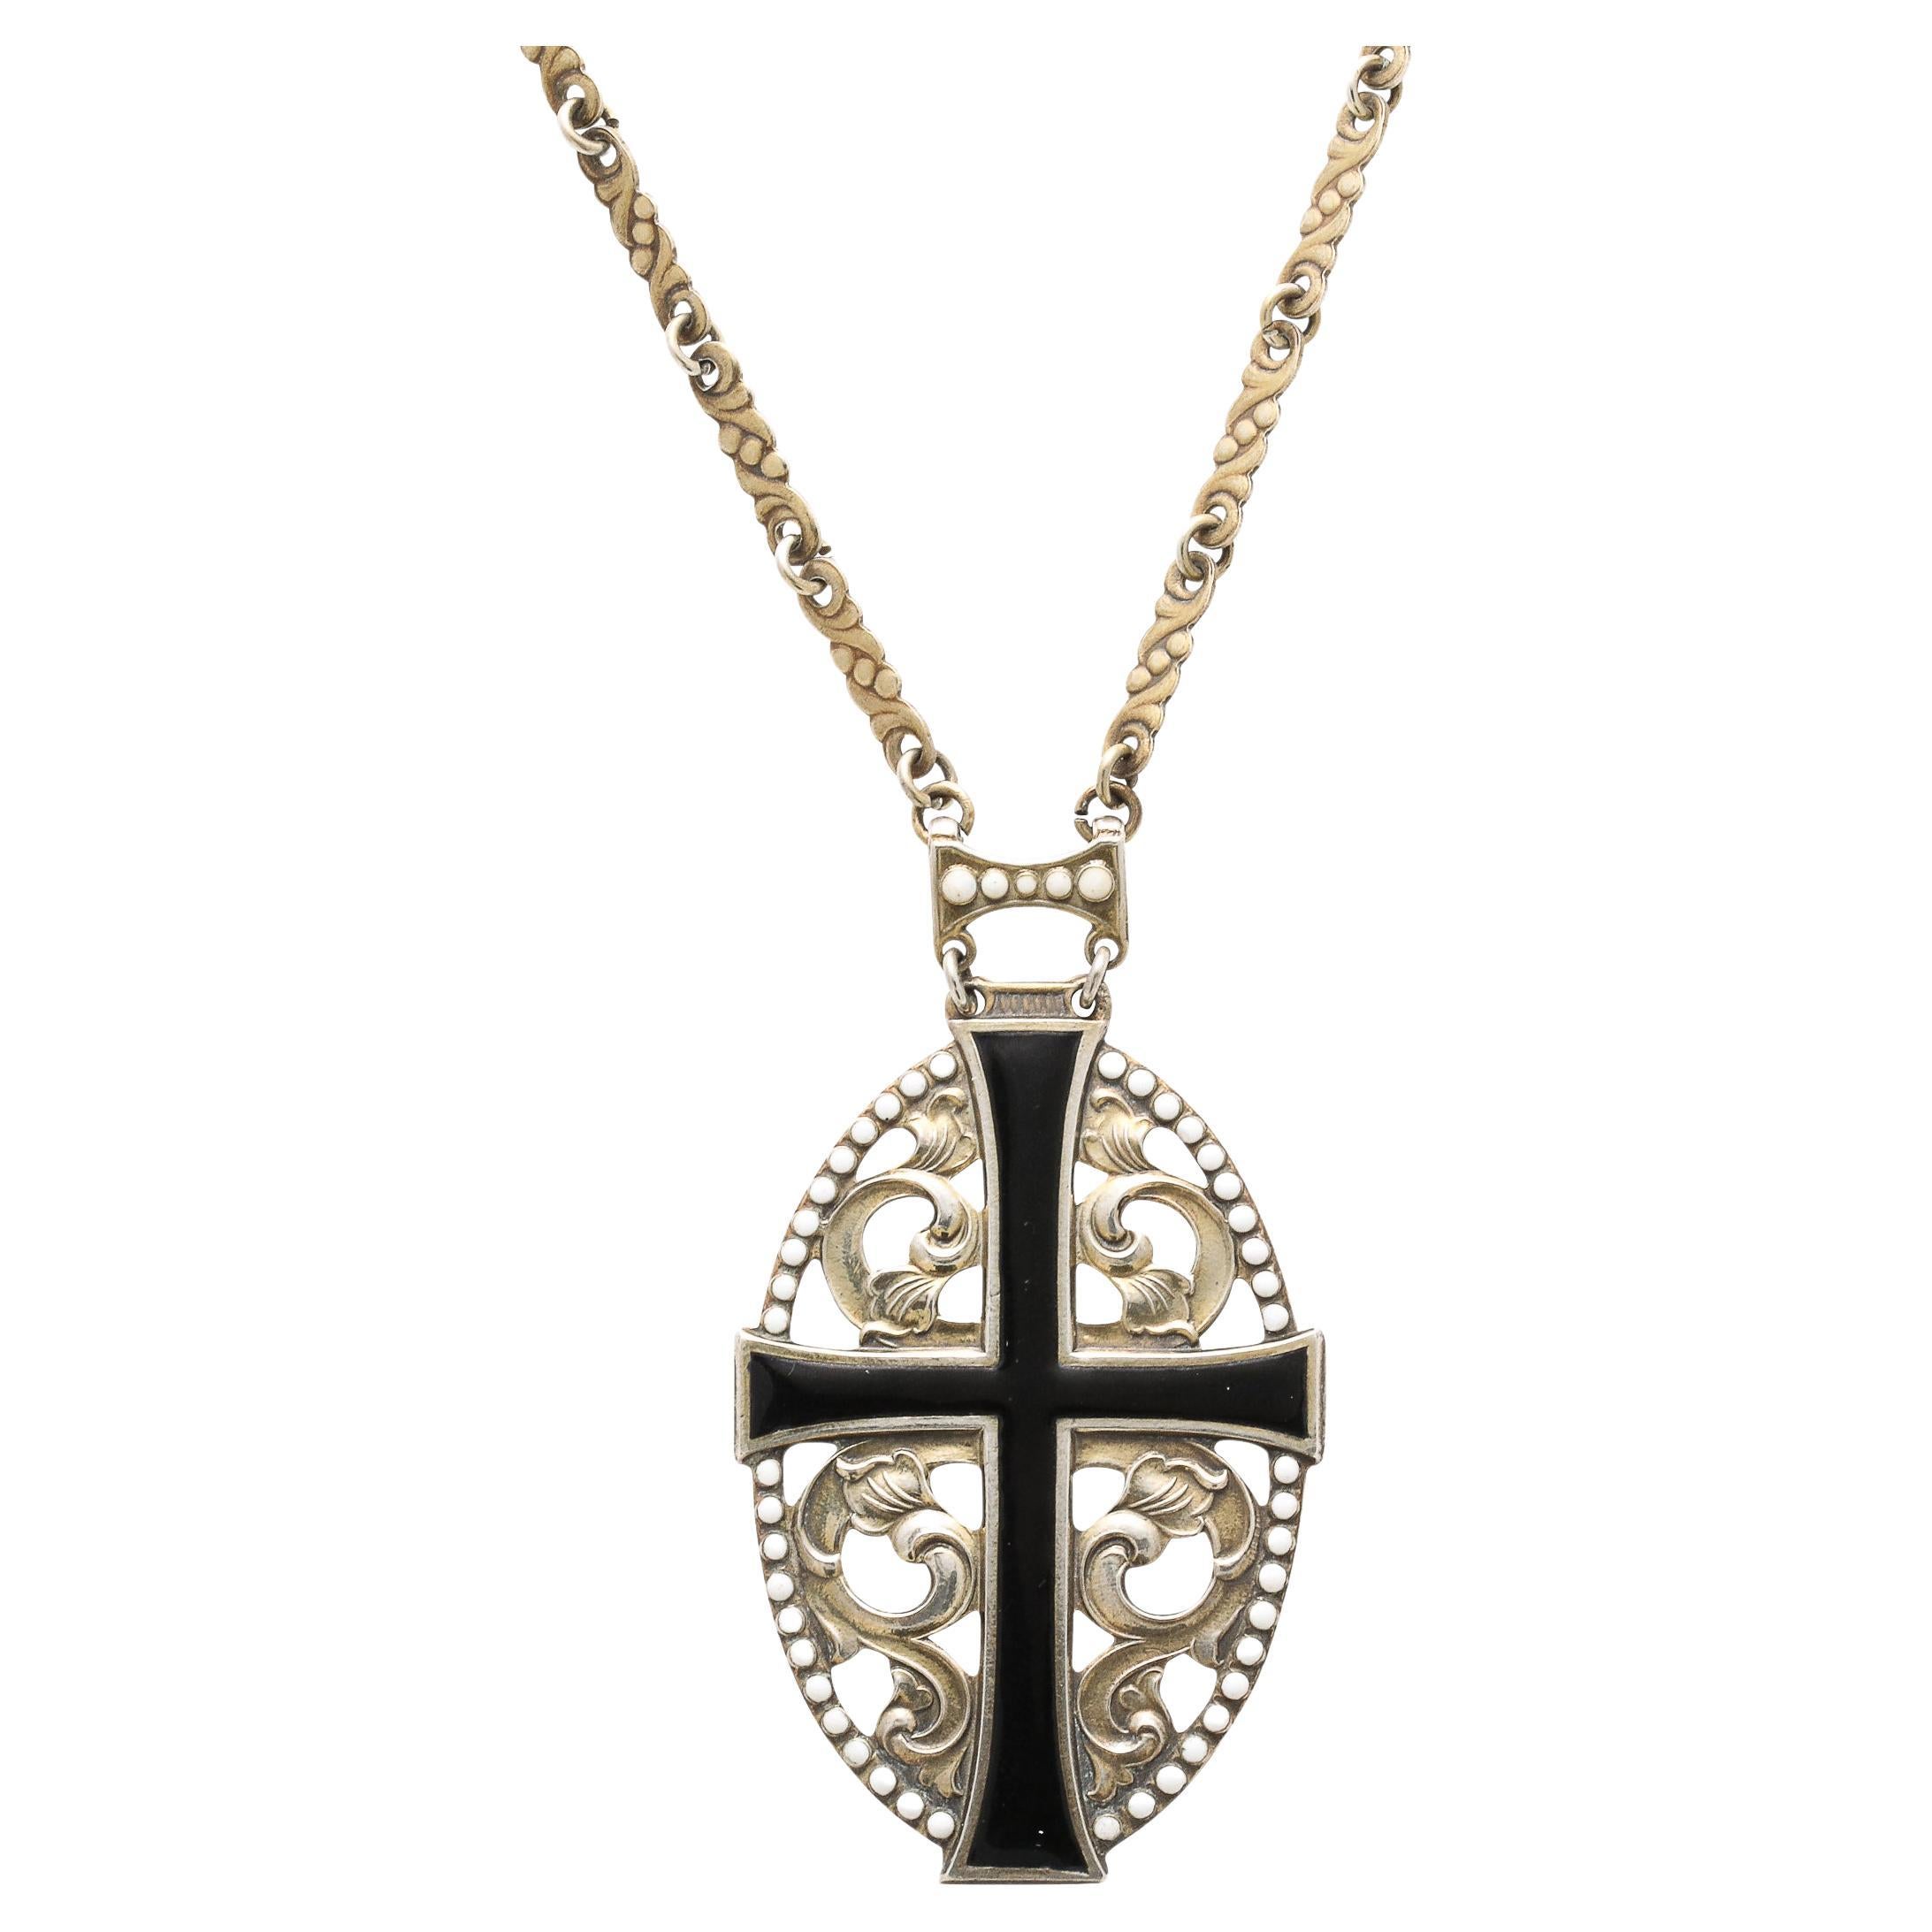 Antique Gilt Silver & Enamel Decorated Openwork Cross Pendant Necklace